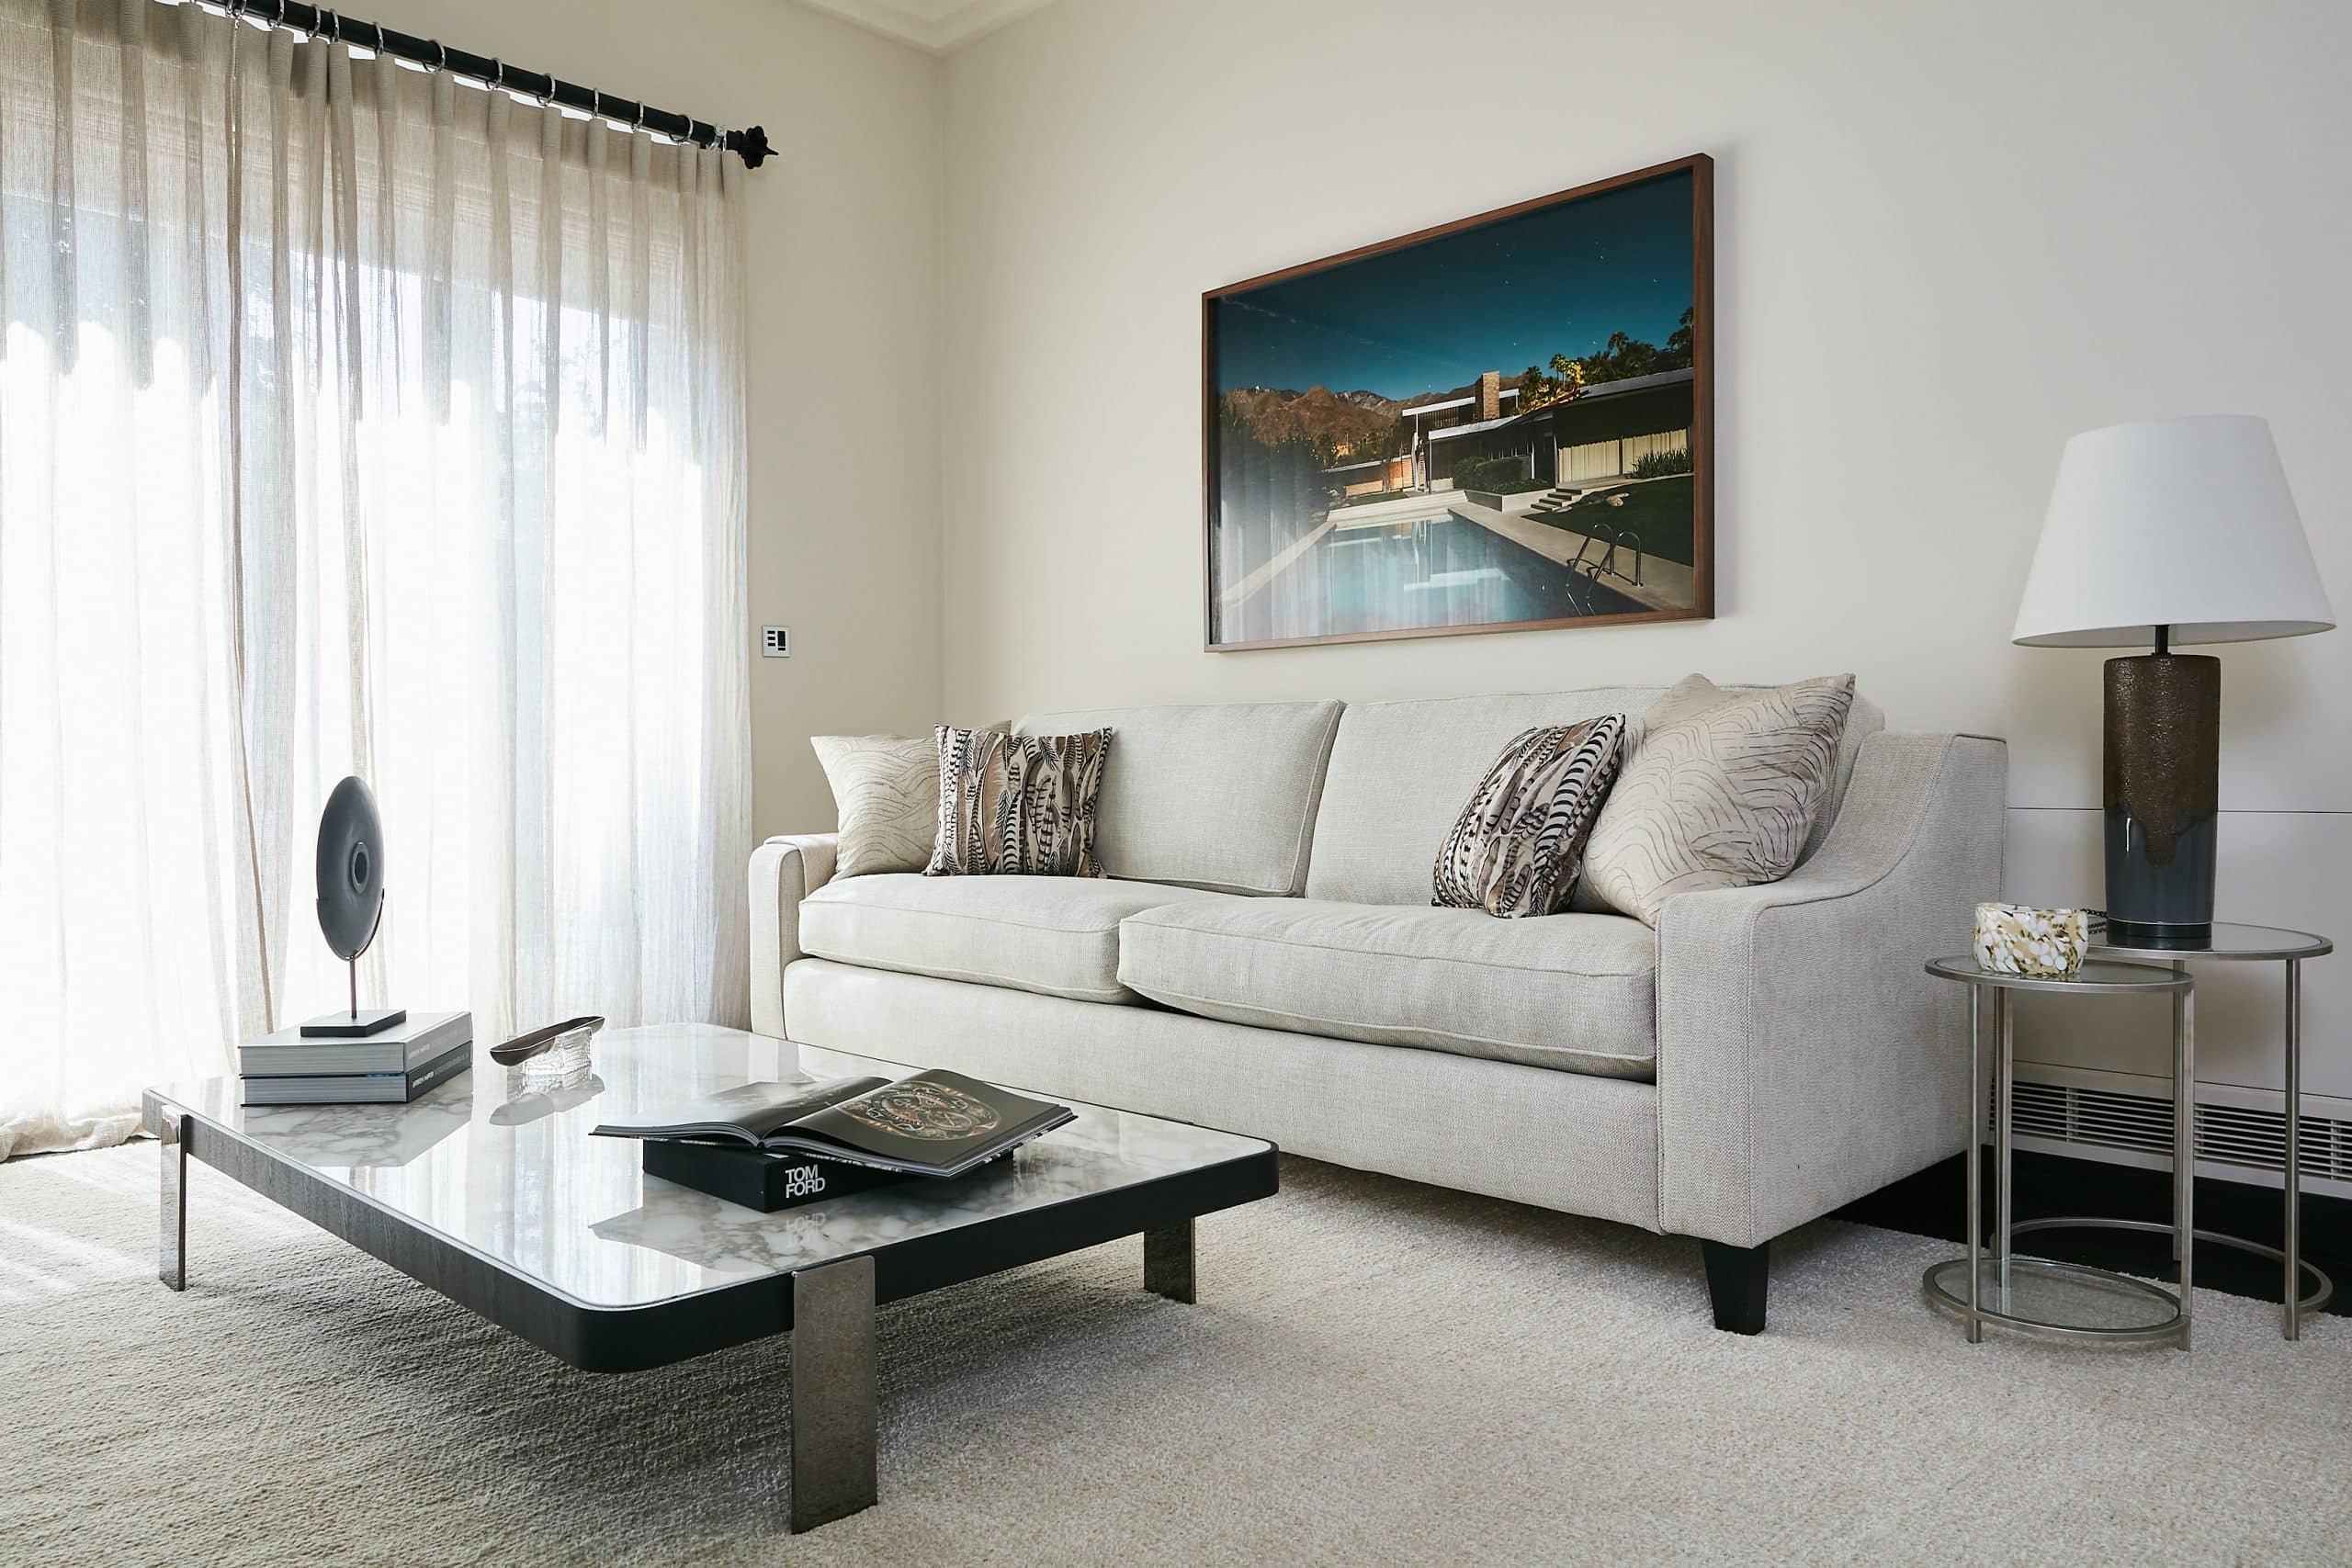 Contemporary style living space in period villa.